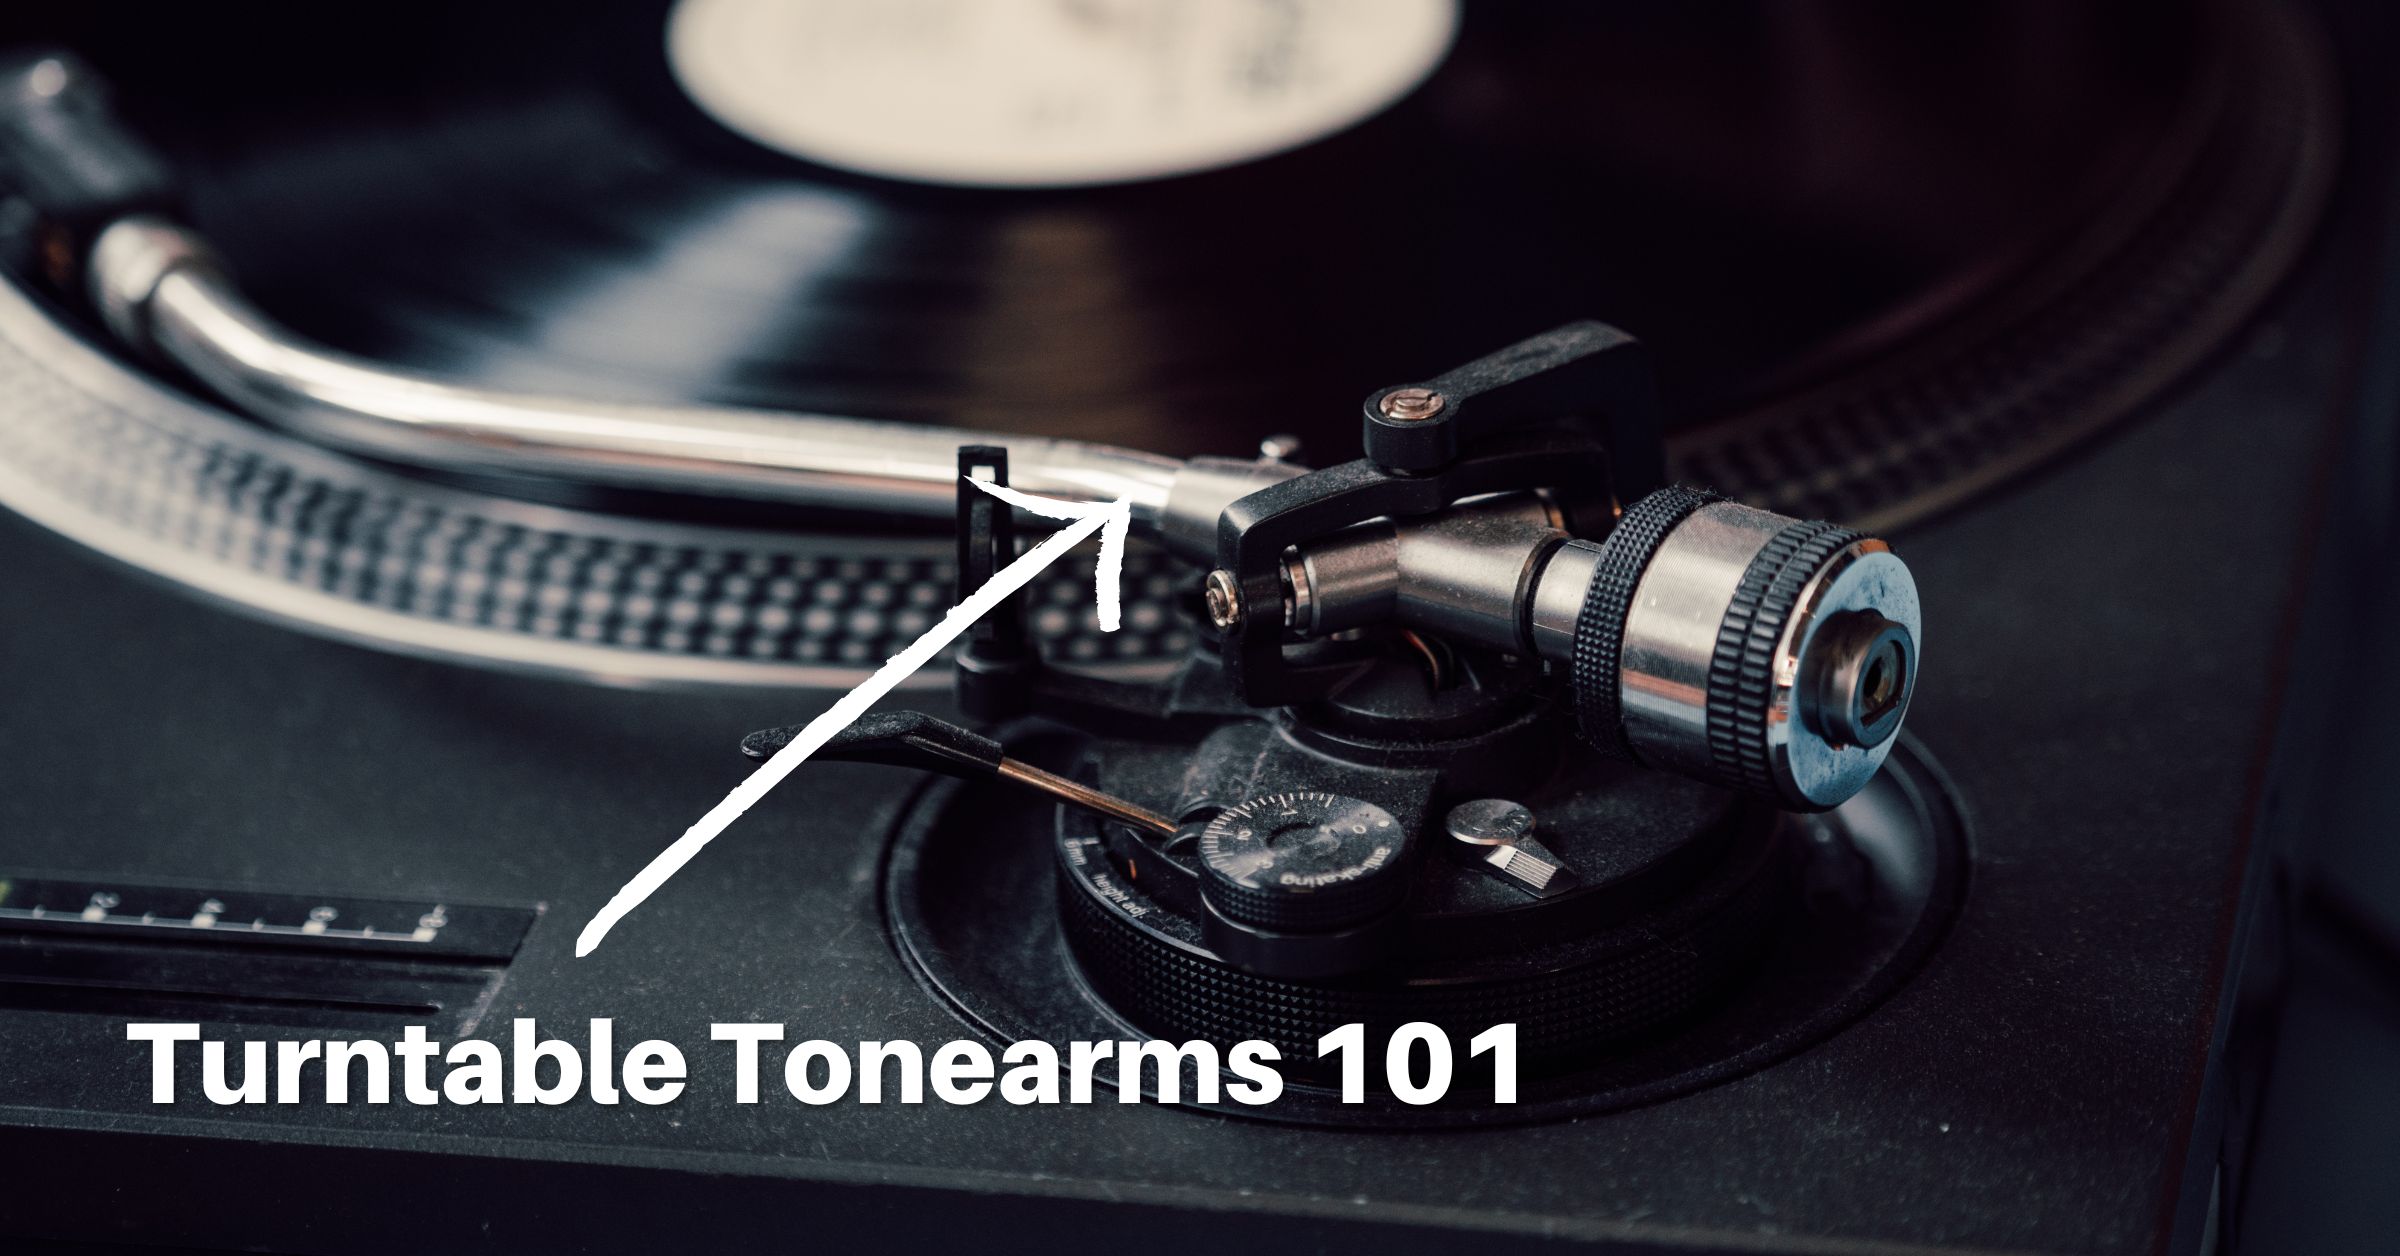 A turntable tonearm